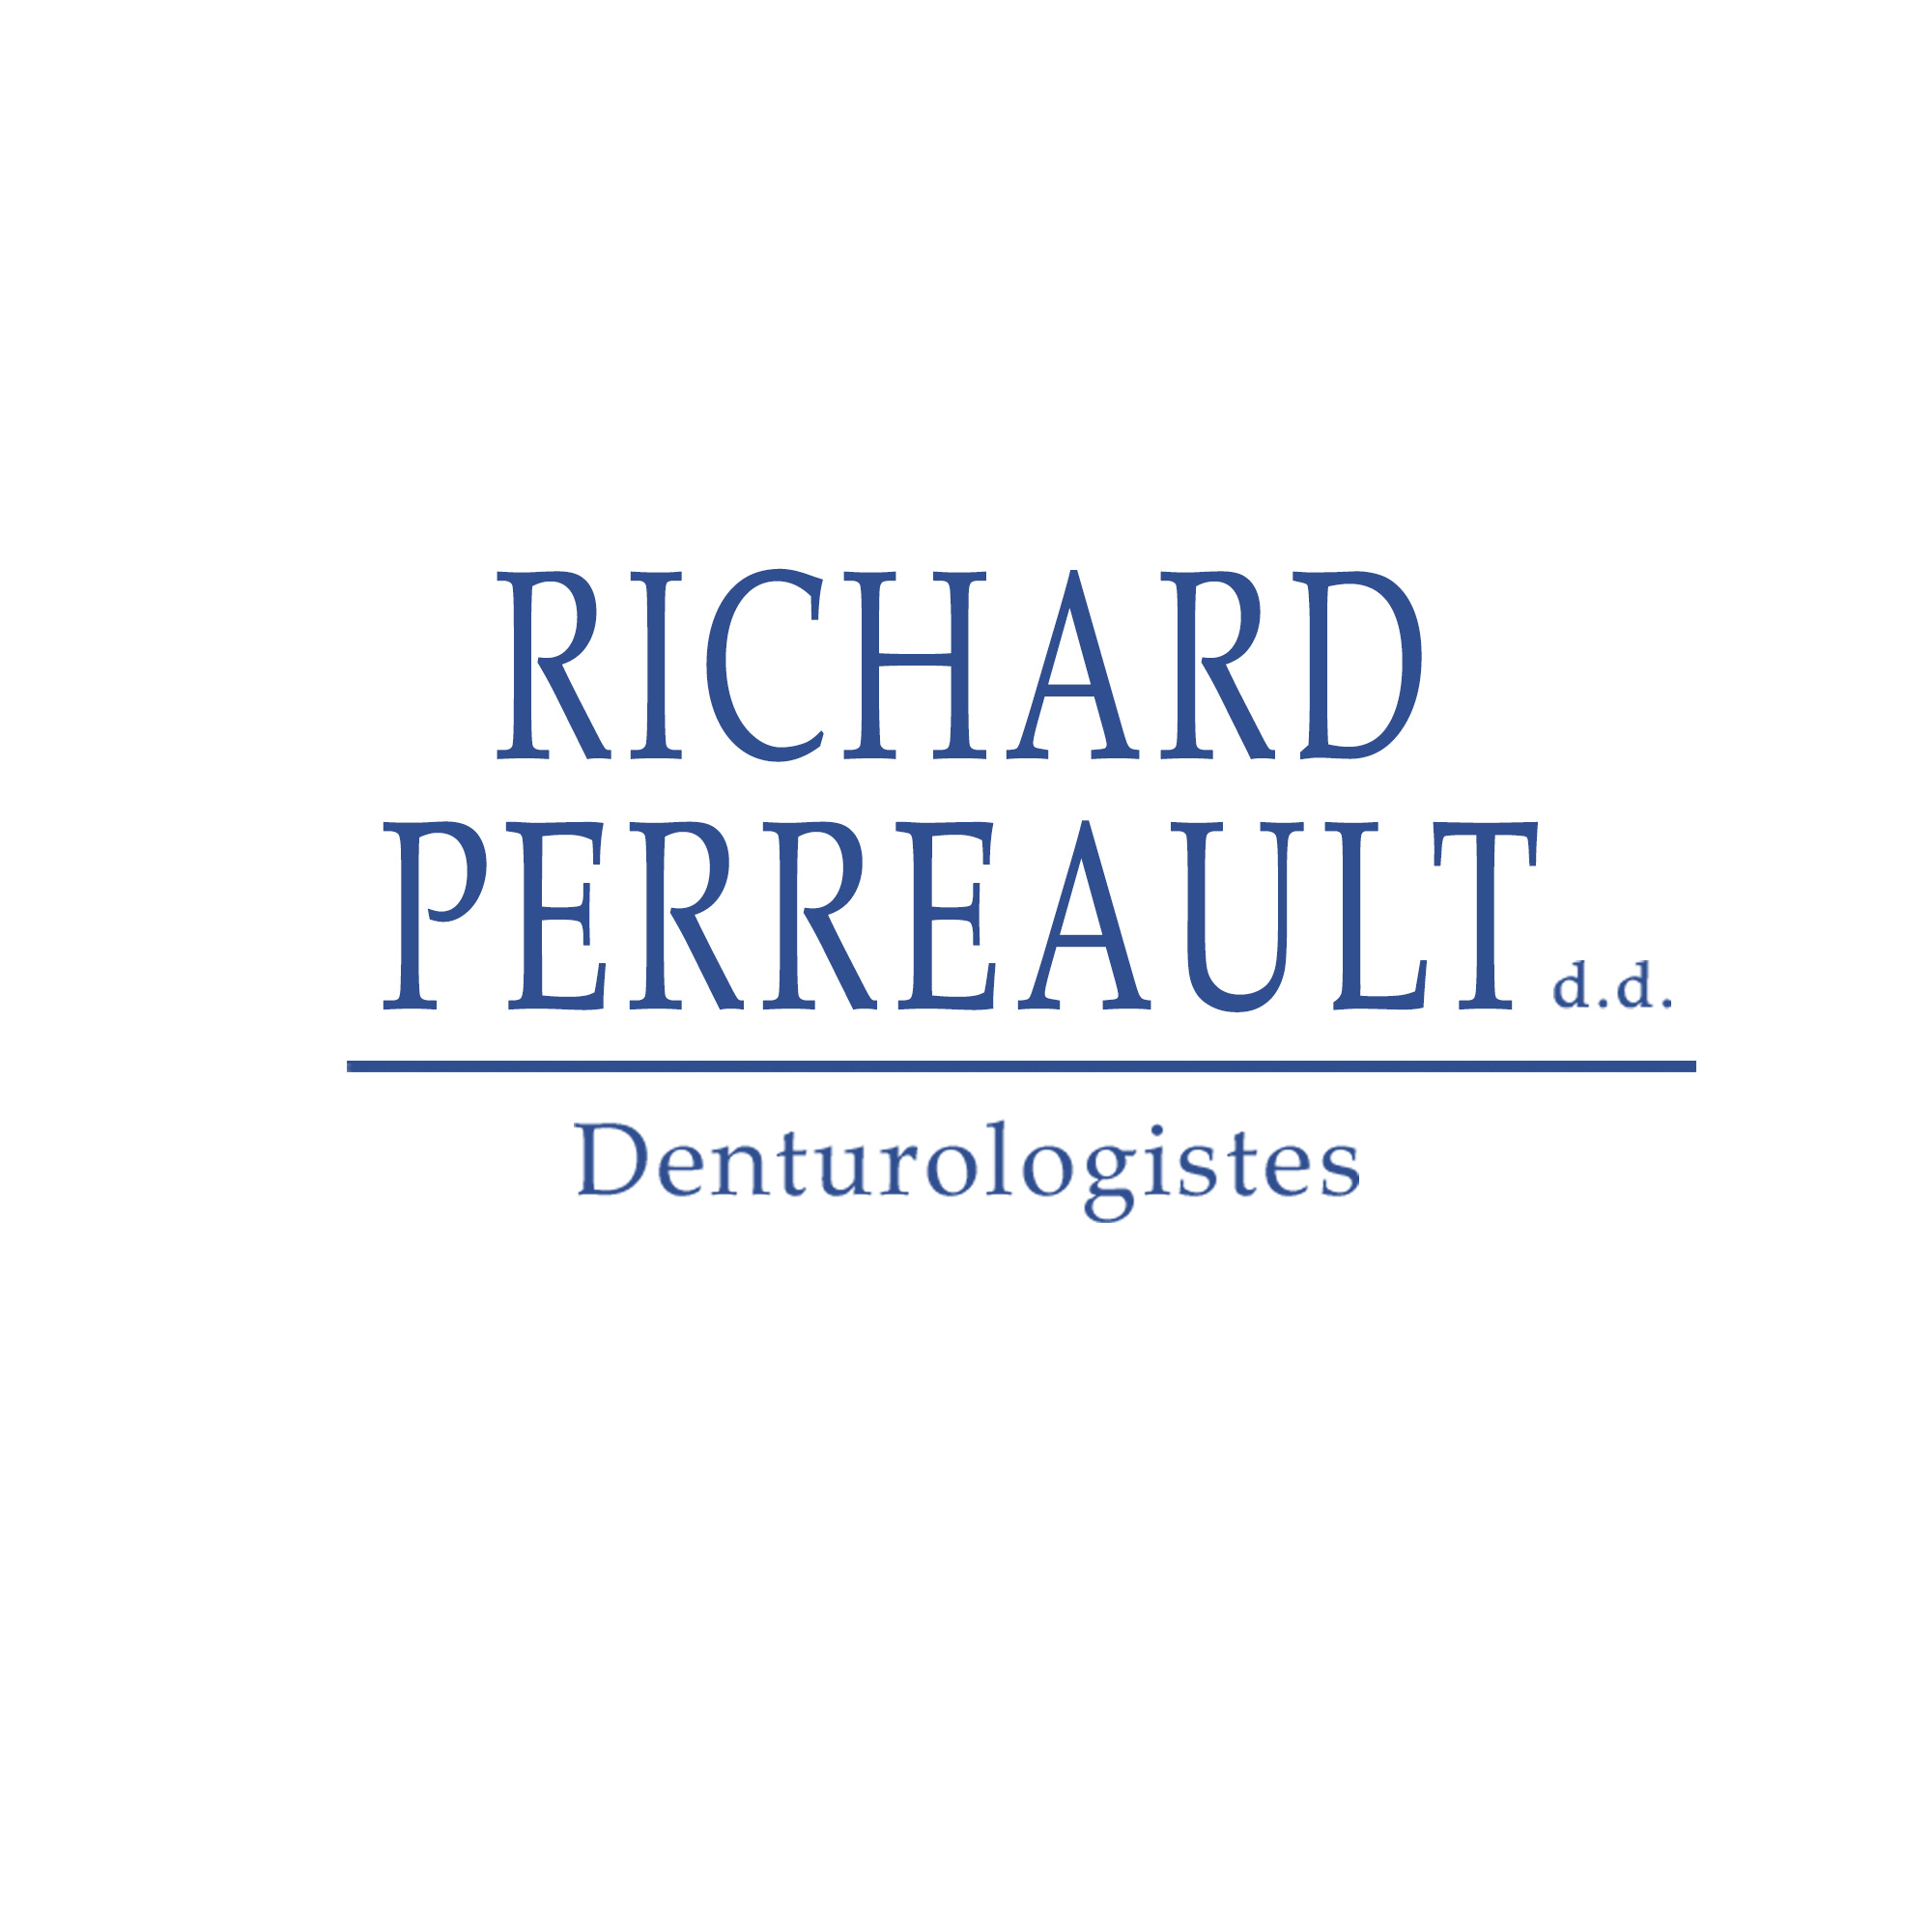 Richard Perreault Denturologiste